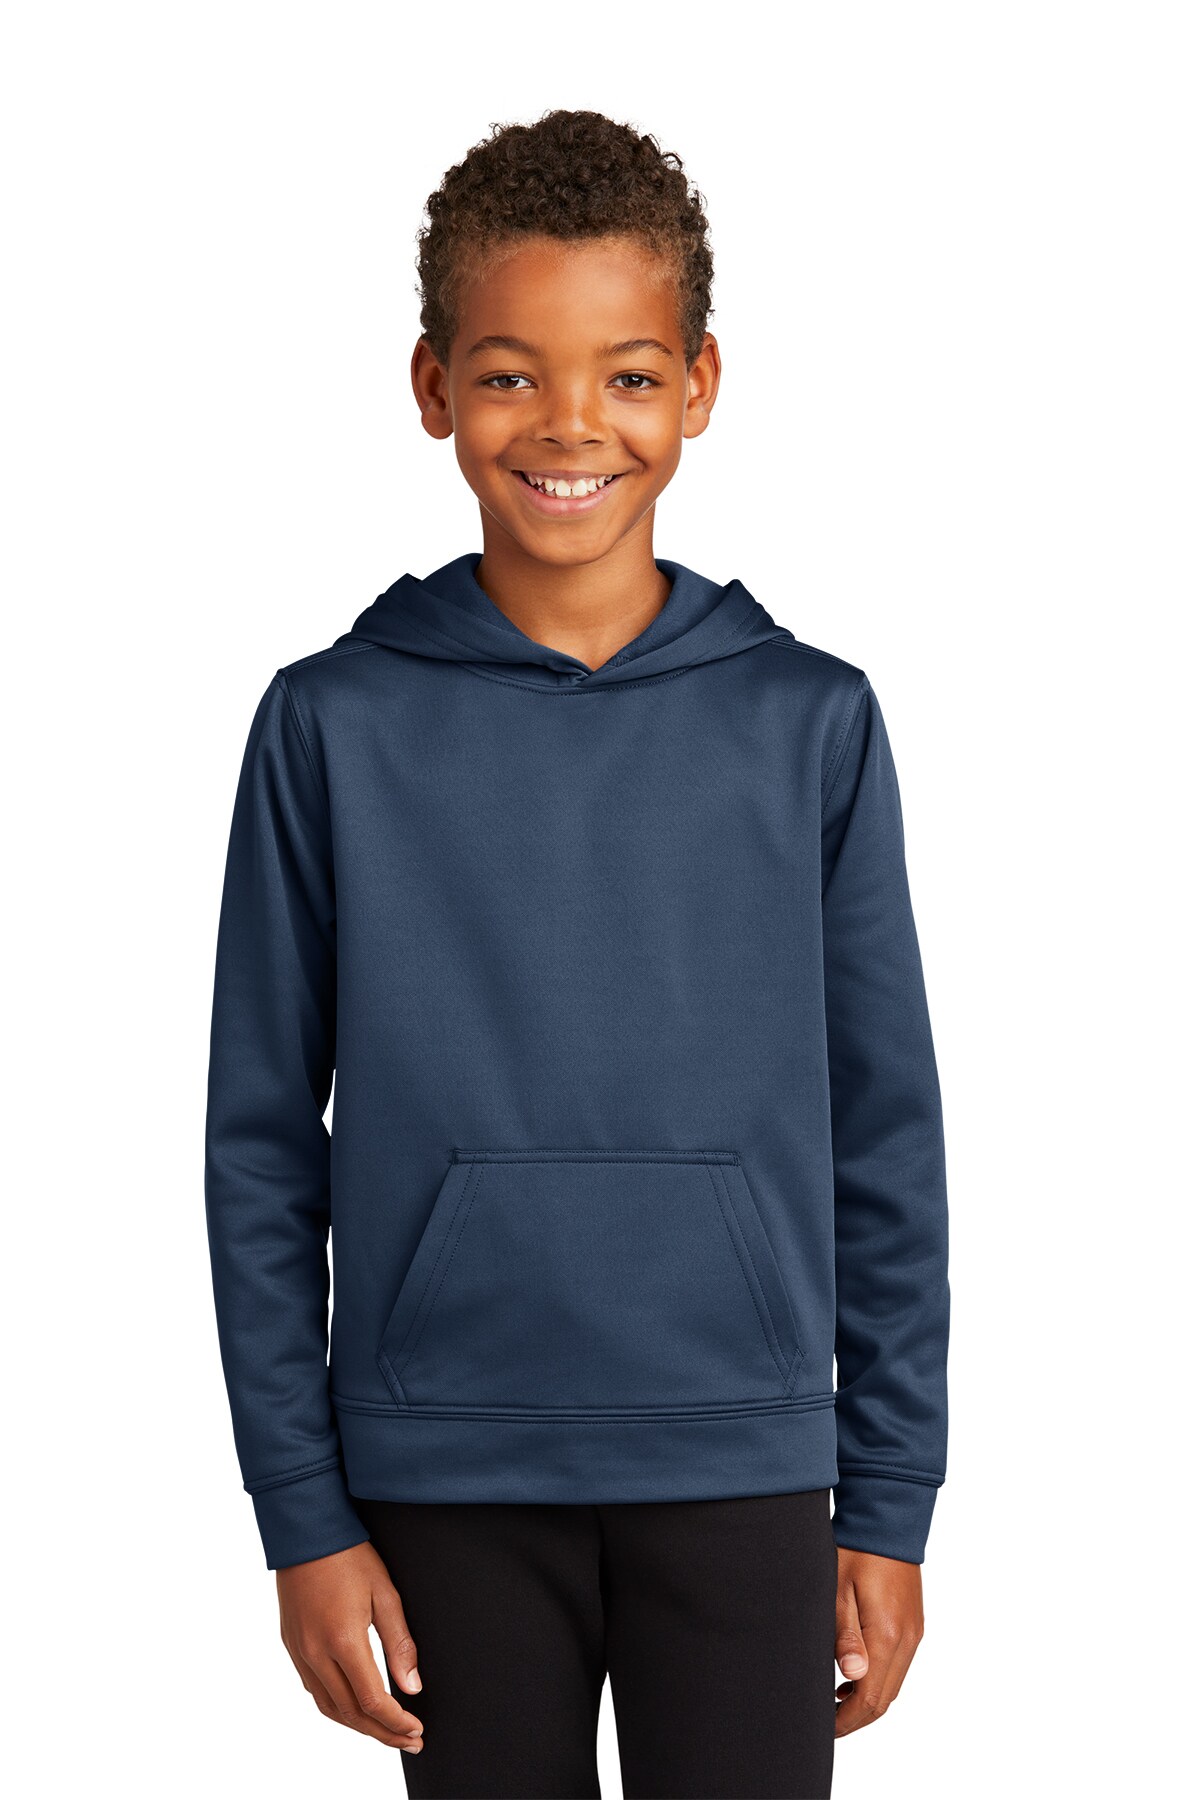 Youth Fleece Pullover Hooded Sweatshirt | RADYAN®